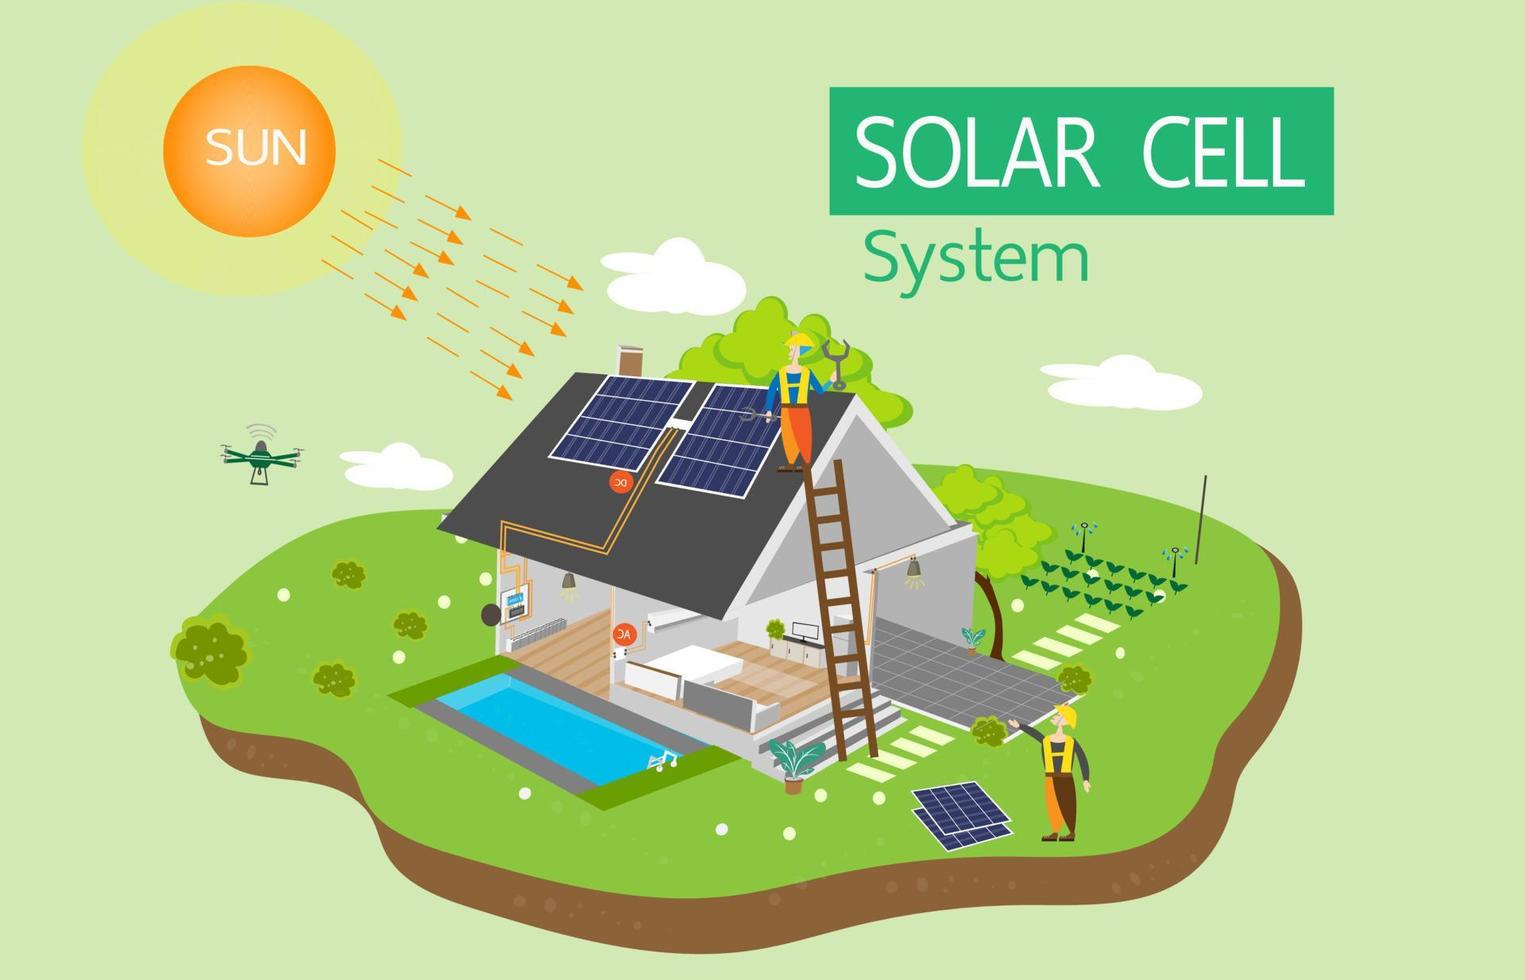 Technician installs solar cell systems for homes. vector